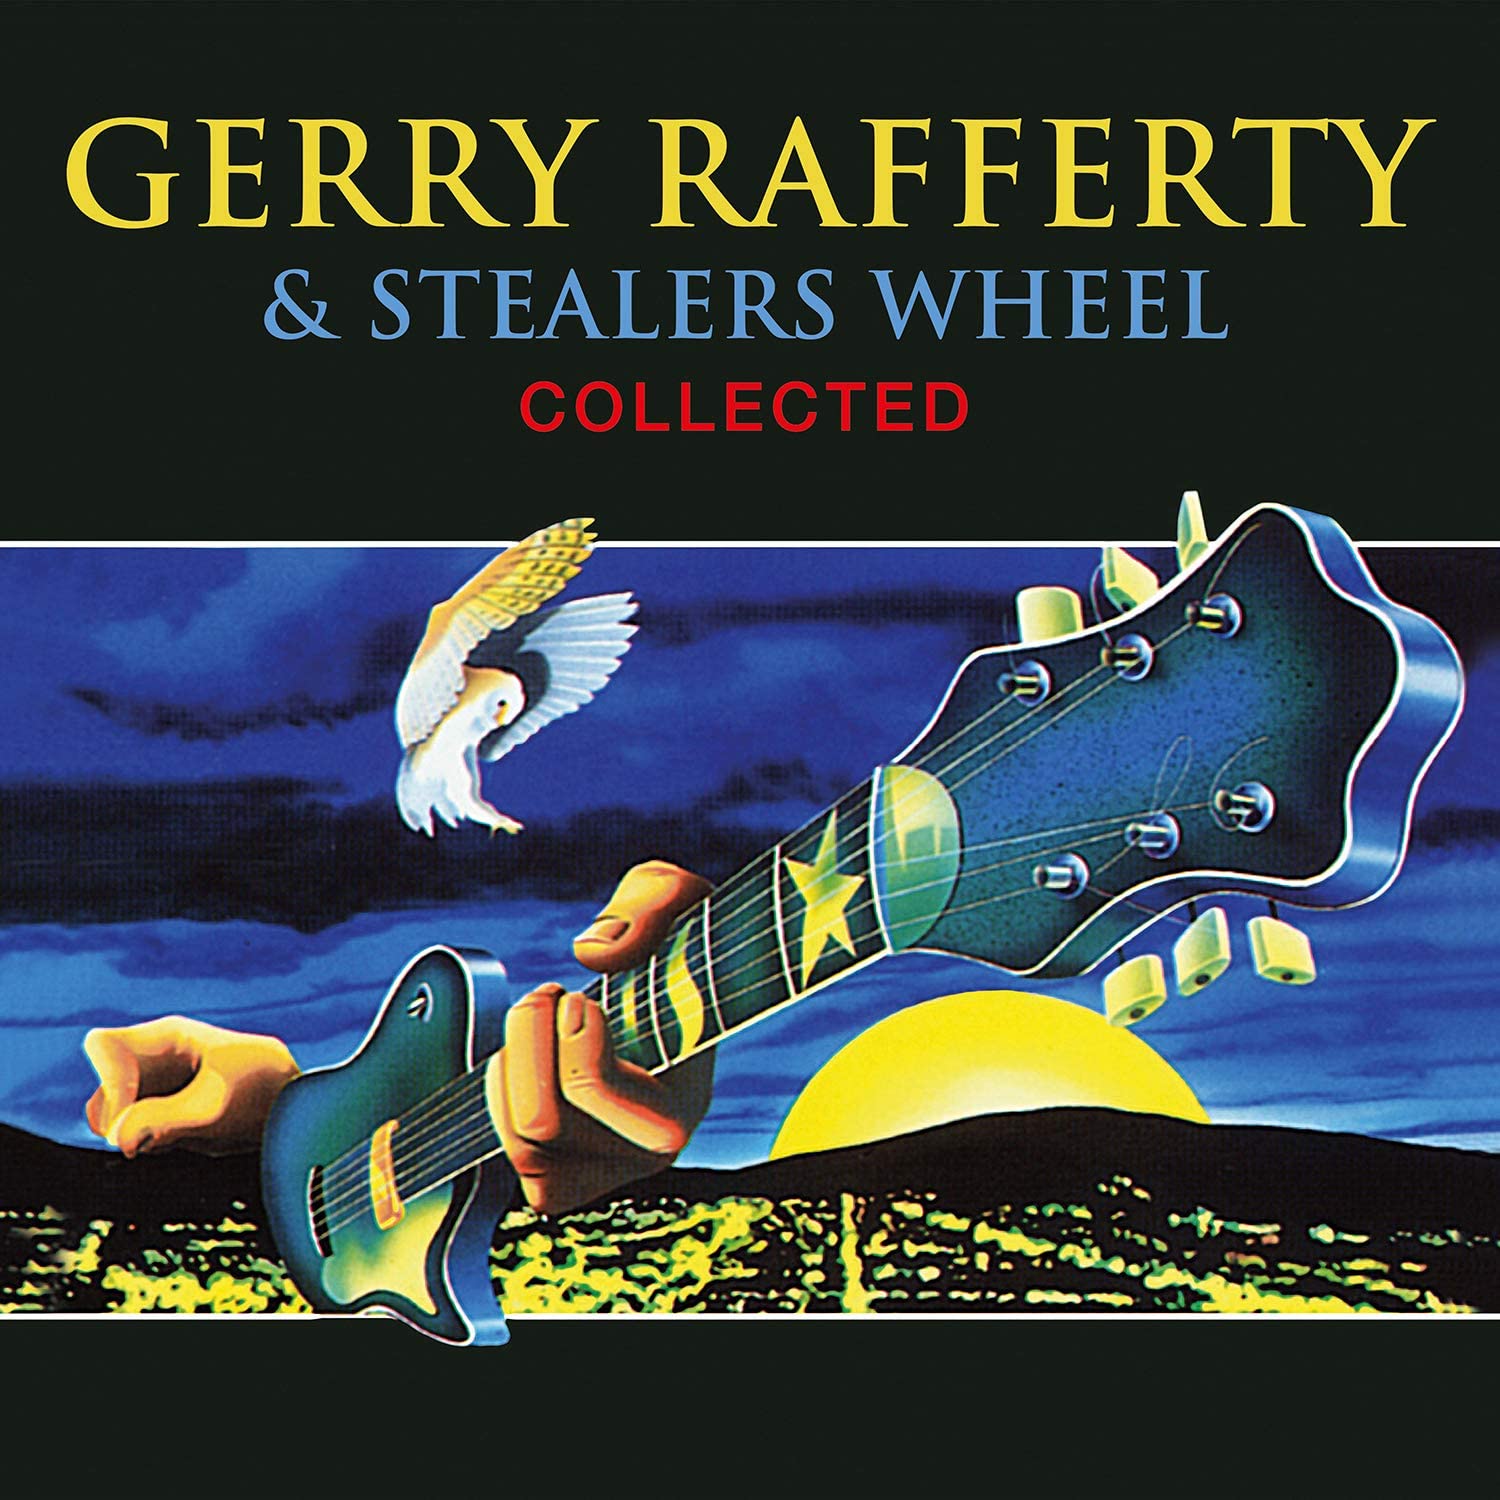 Gerry Rafferty & Stealers Wheel - Collected (2LP)